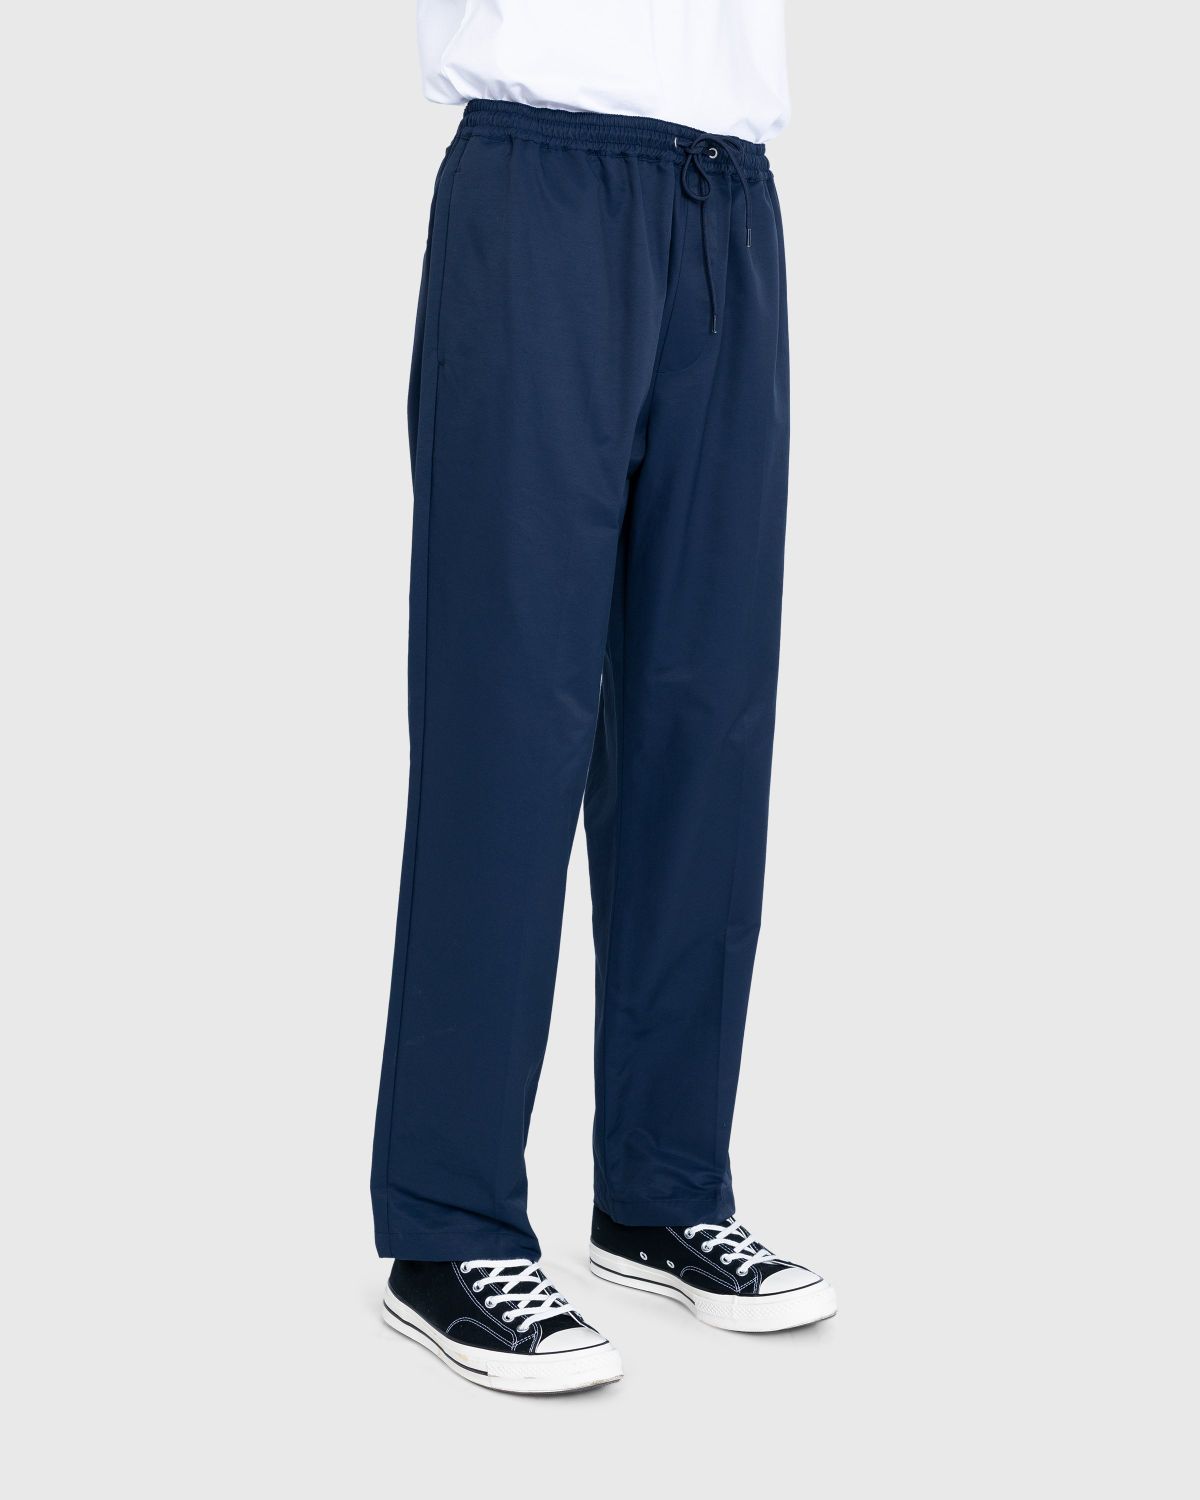 Highsnobiety – Cotton Nylon Elastic Pants Navy - Trousers - Blue - Image 3